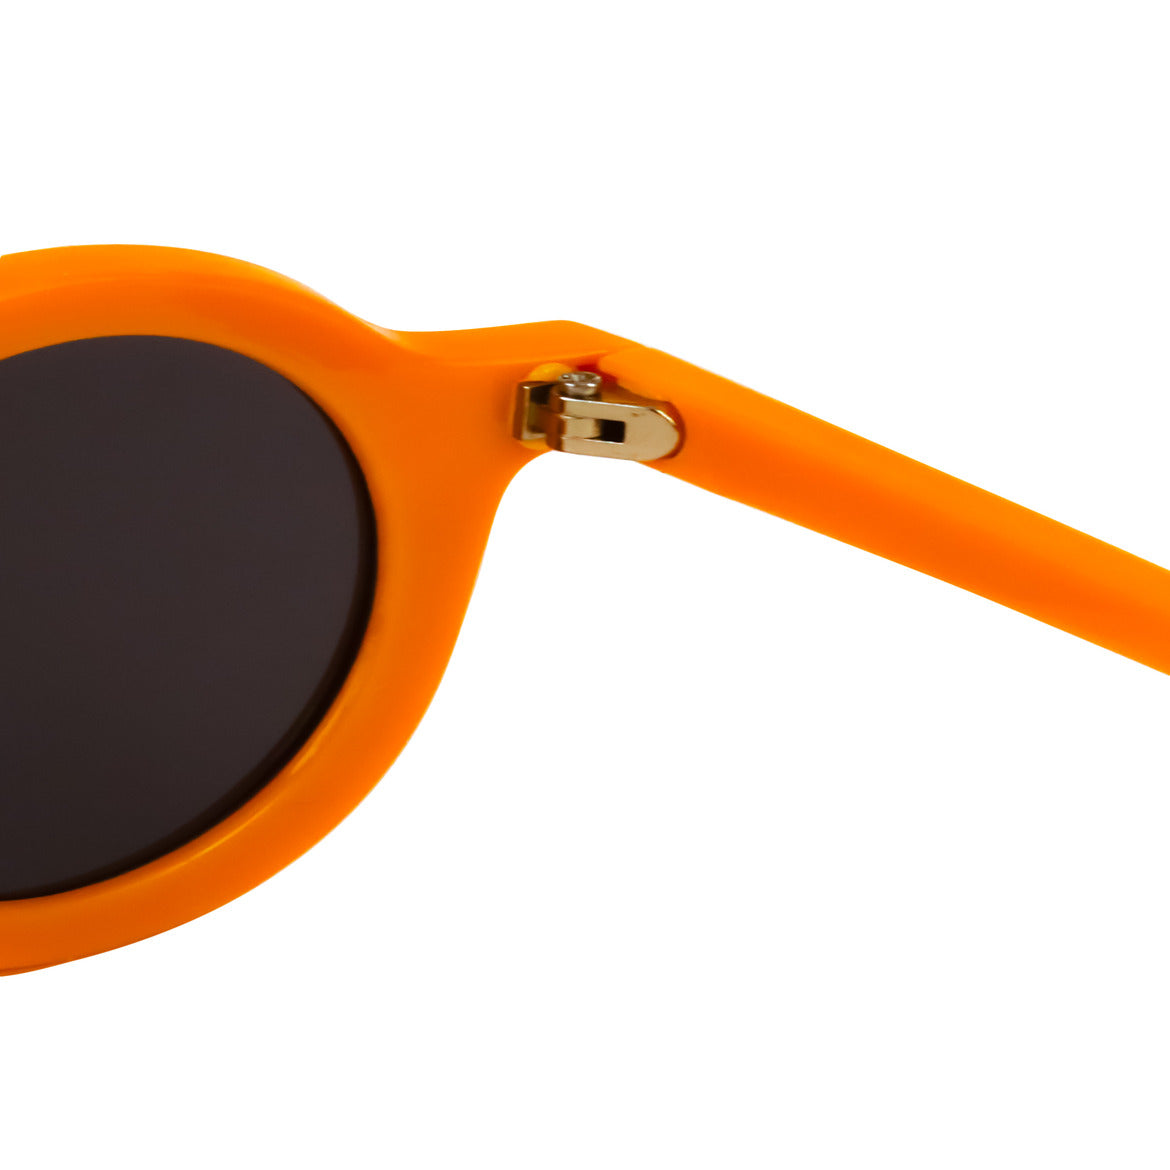 Spiky Round UV Protected Sunglass - Orange White